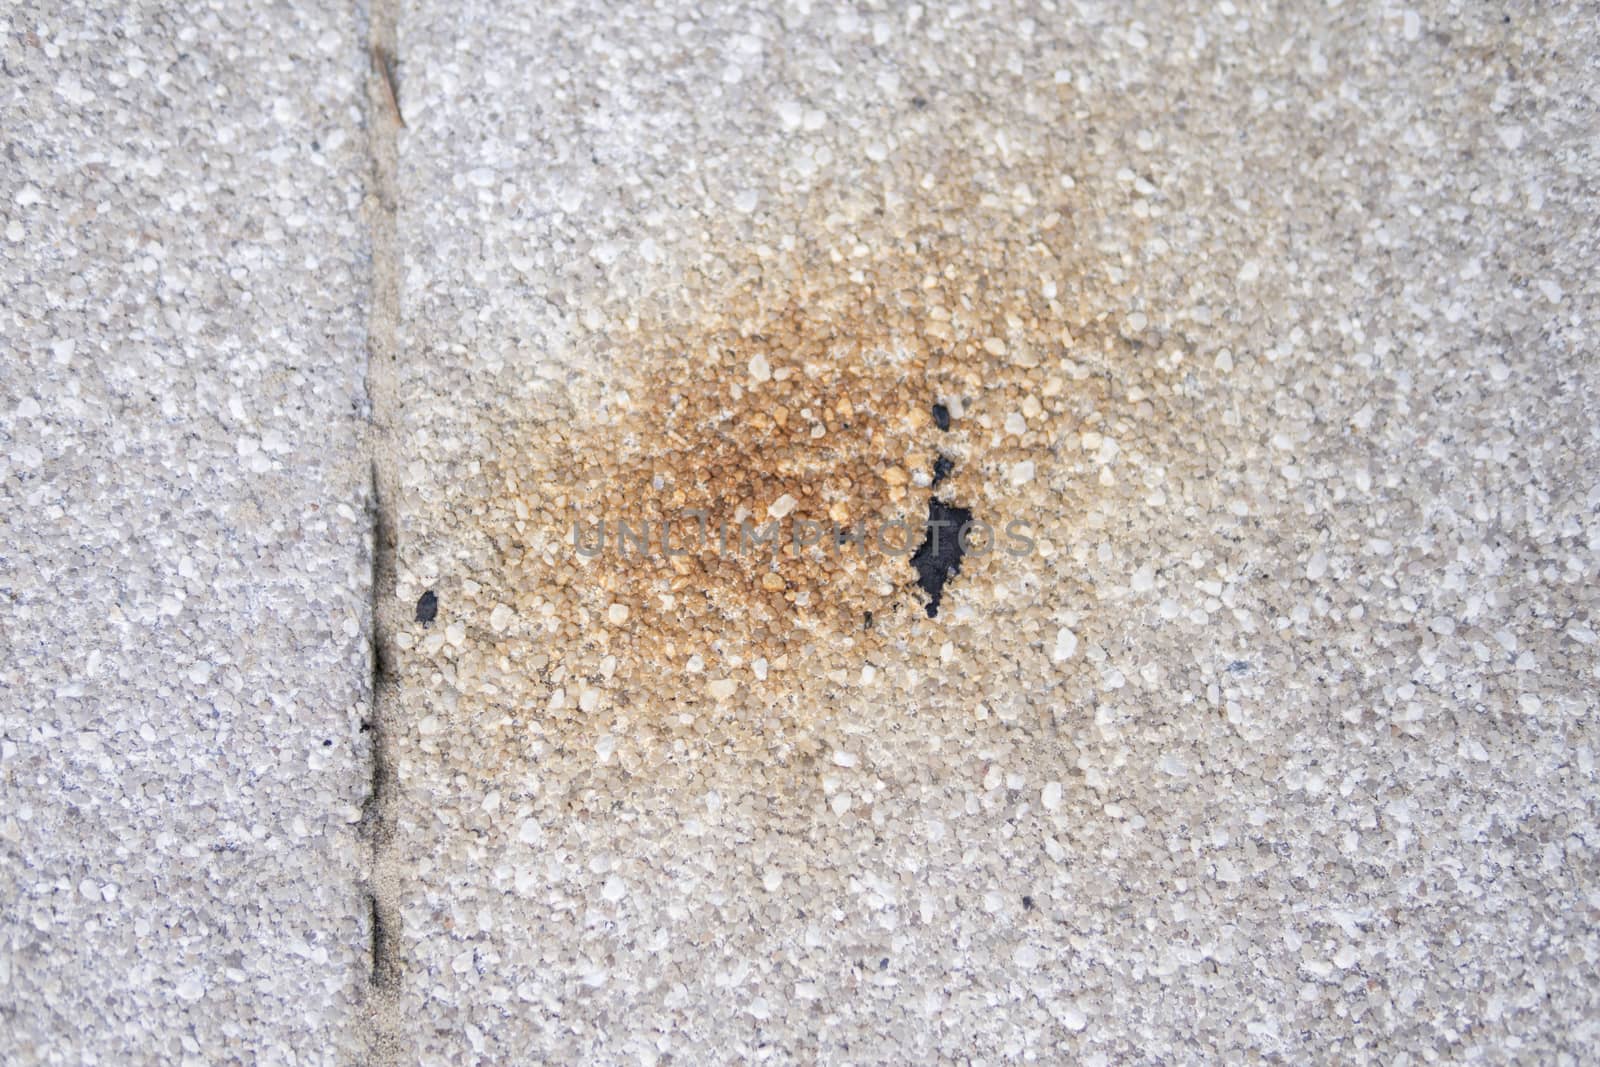  rusty spot on a concrete pavement by michal812